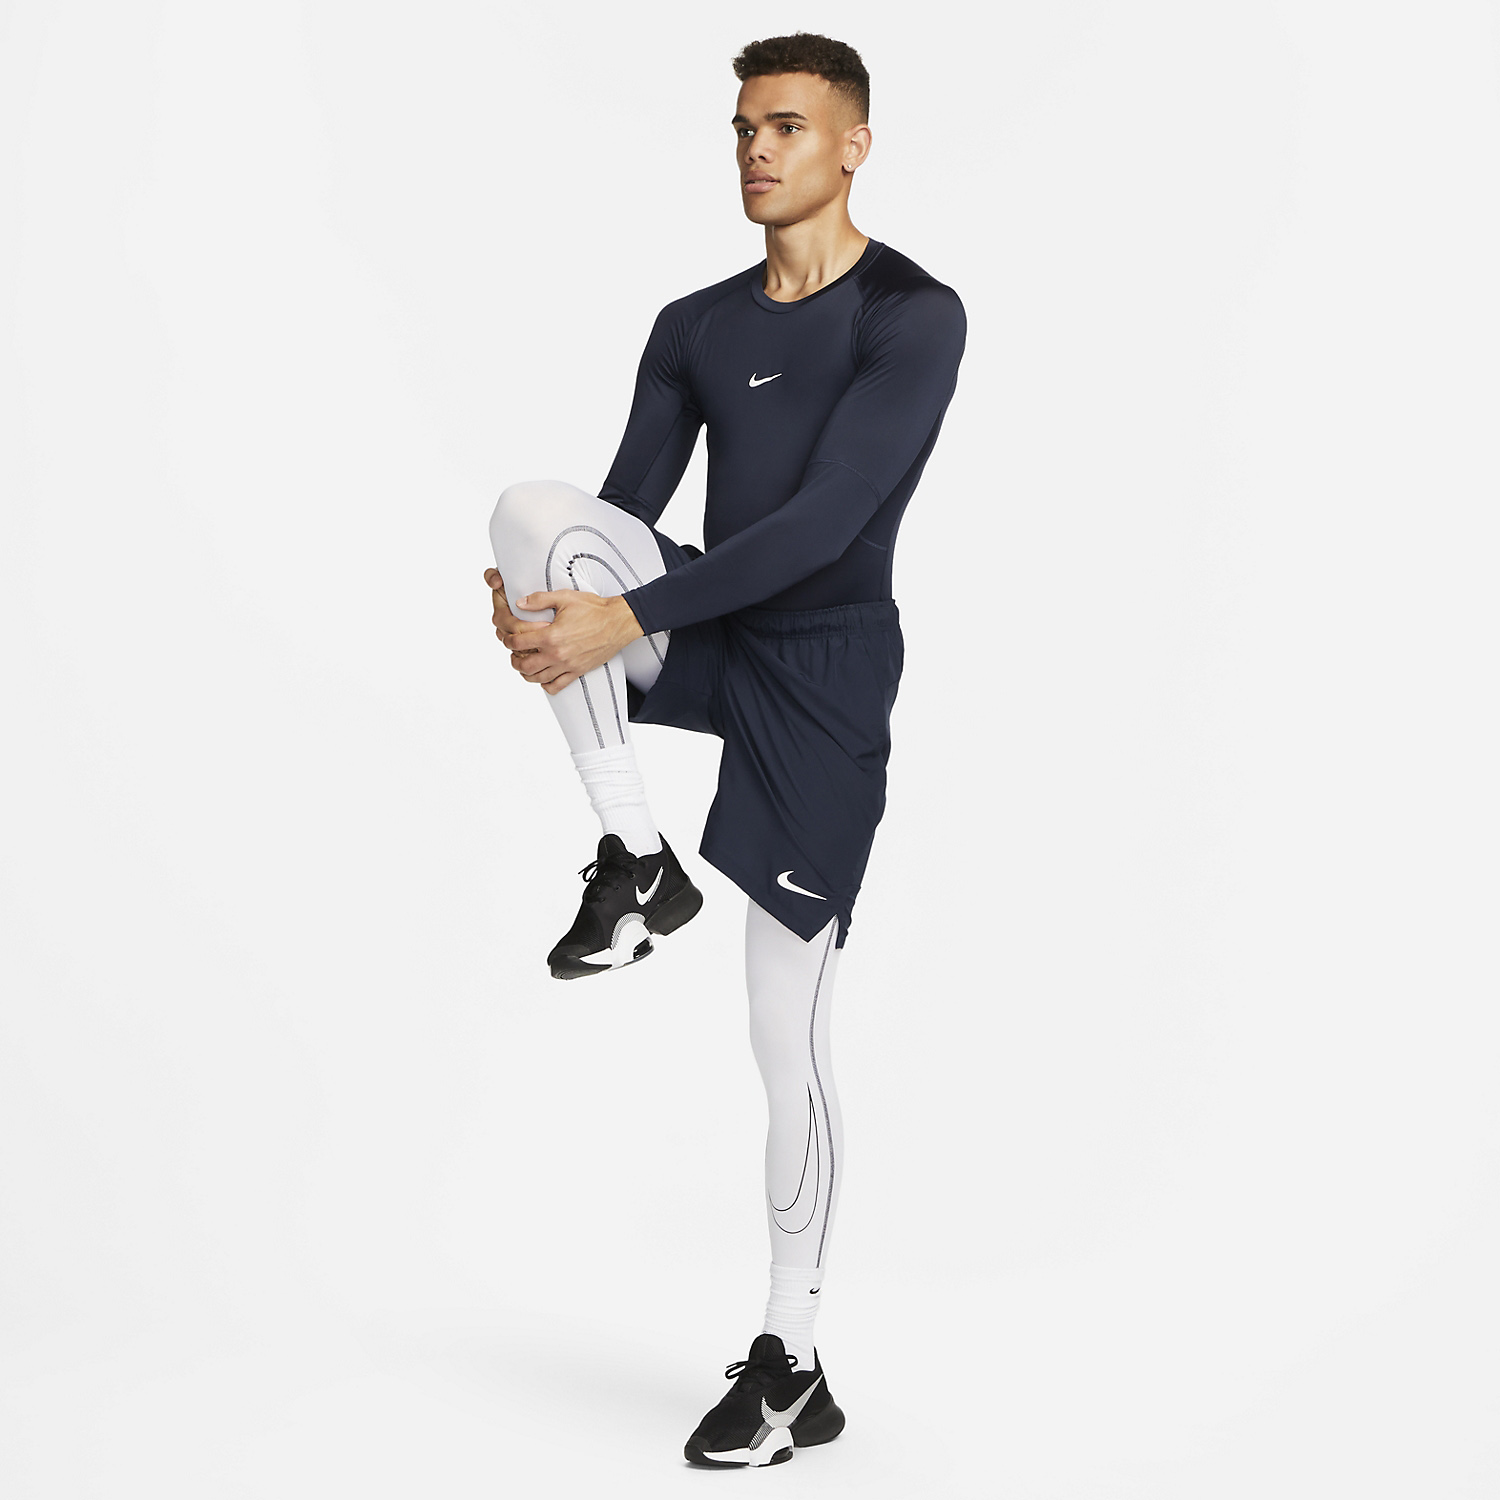 Nike Dri-FIT Pro Camisa - Obsidian/White